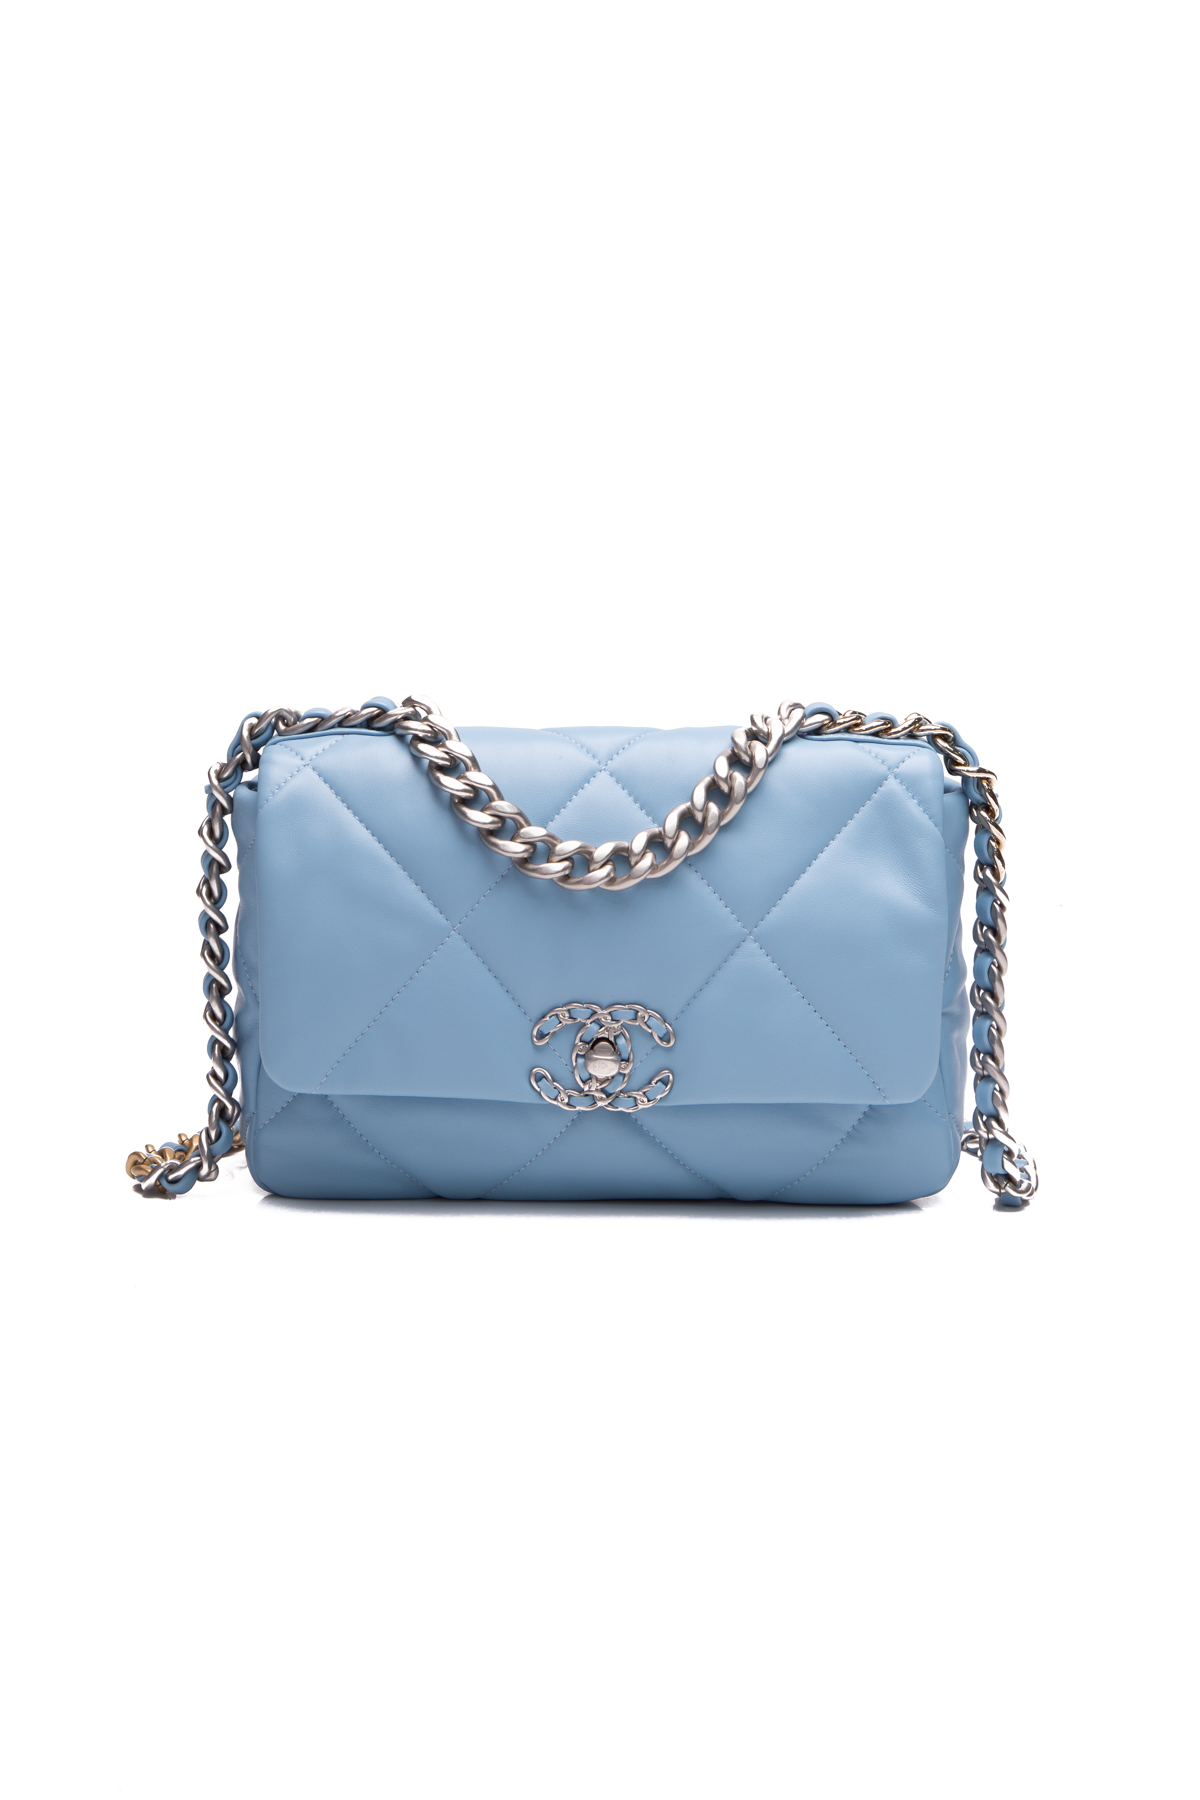 Chanel Chanel19 Small Bag Couture USA